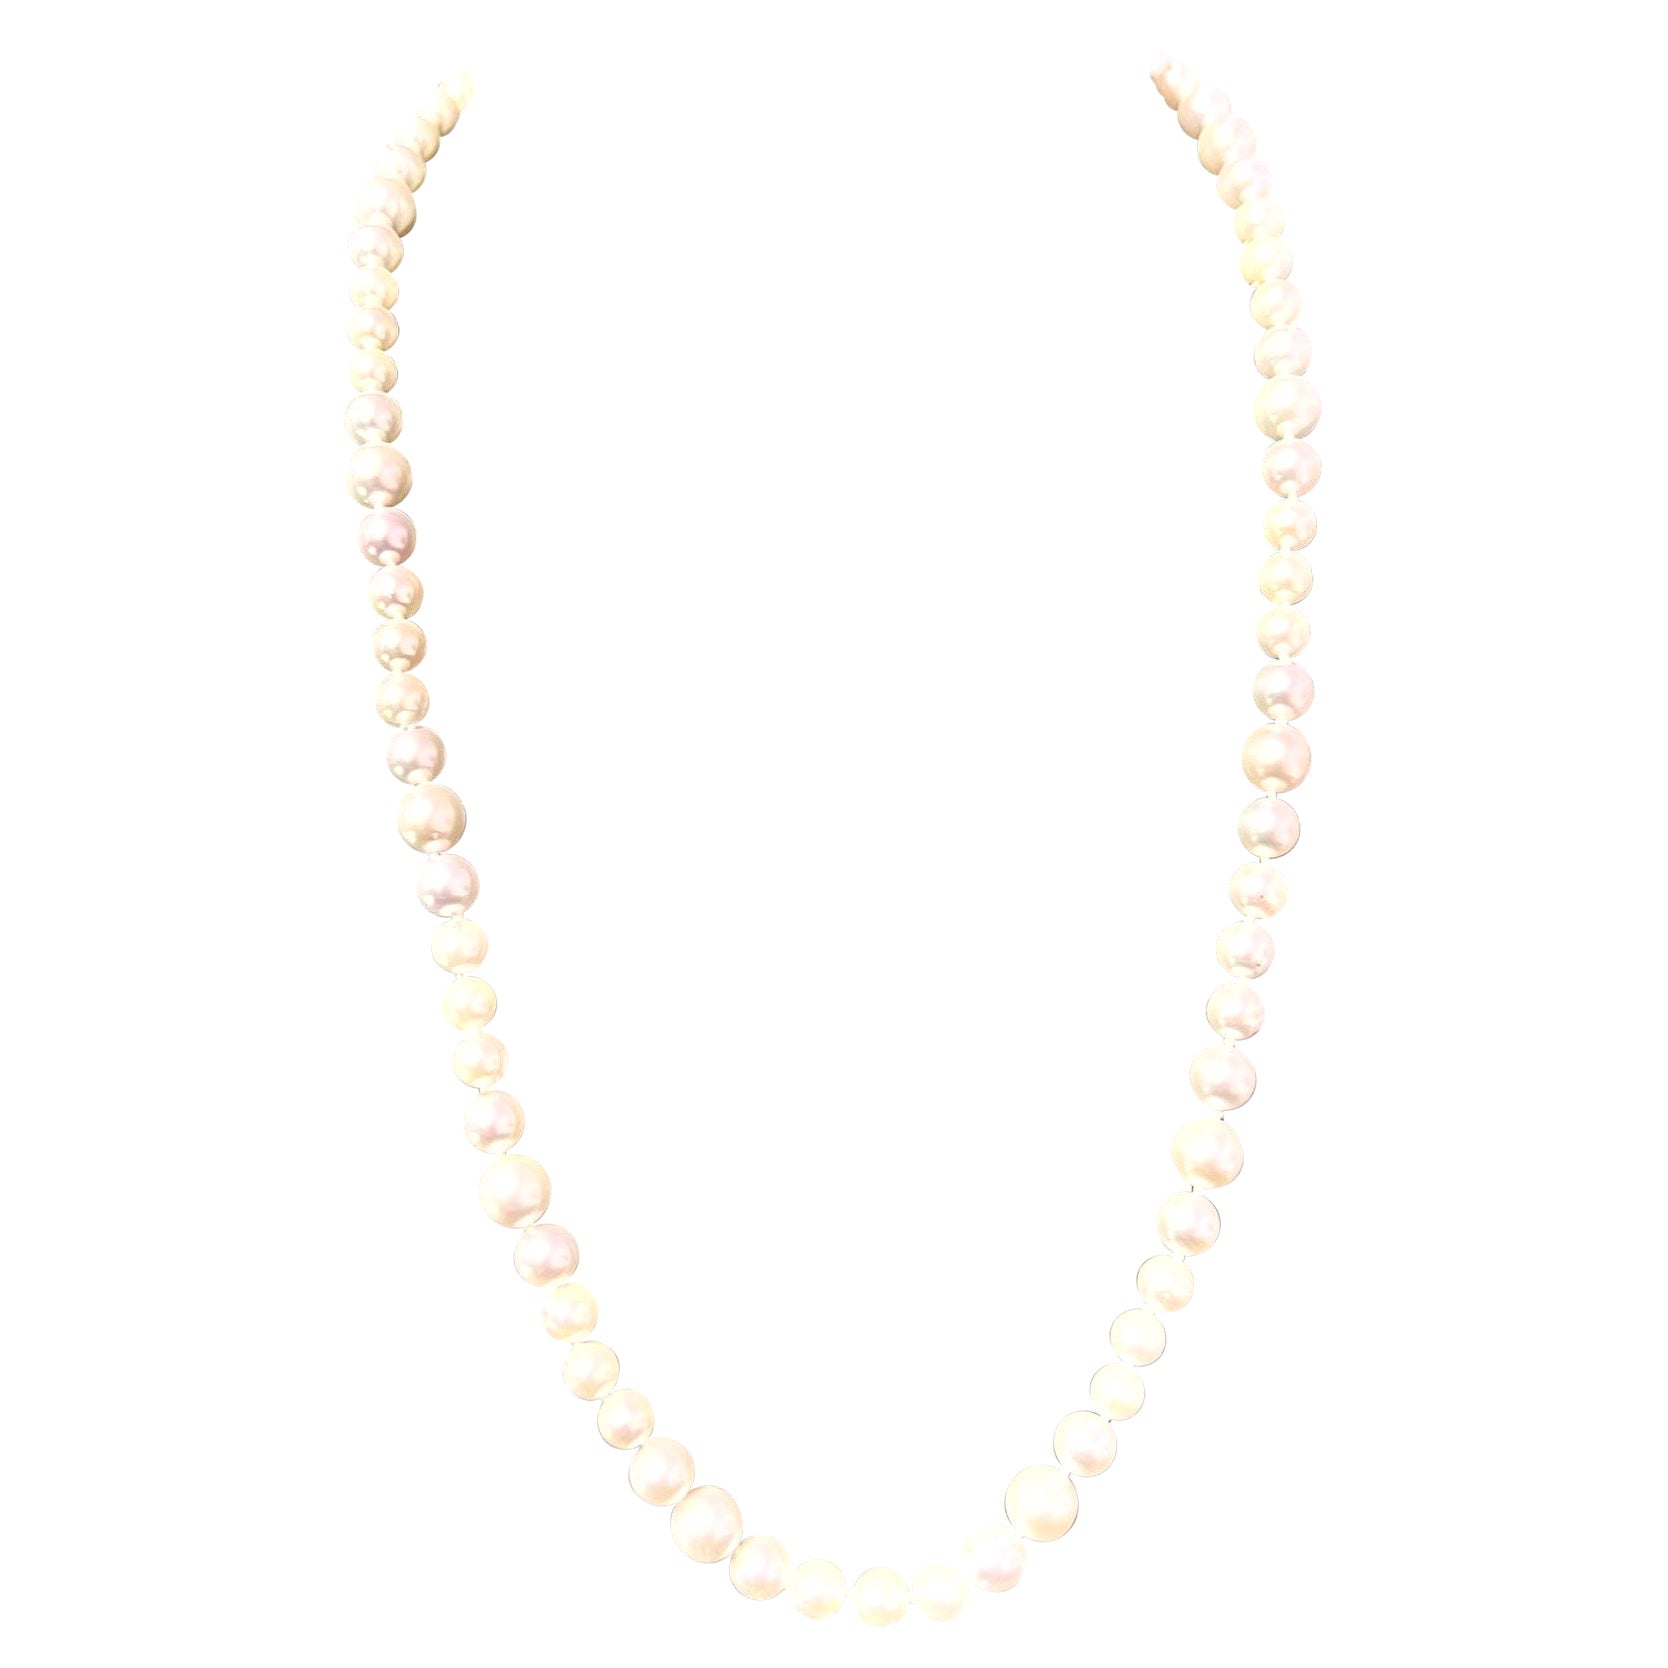 Collier de perles Akoya 21"" en or 14k 8 mm certifié AAA